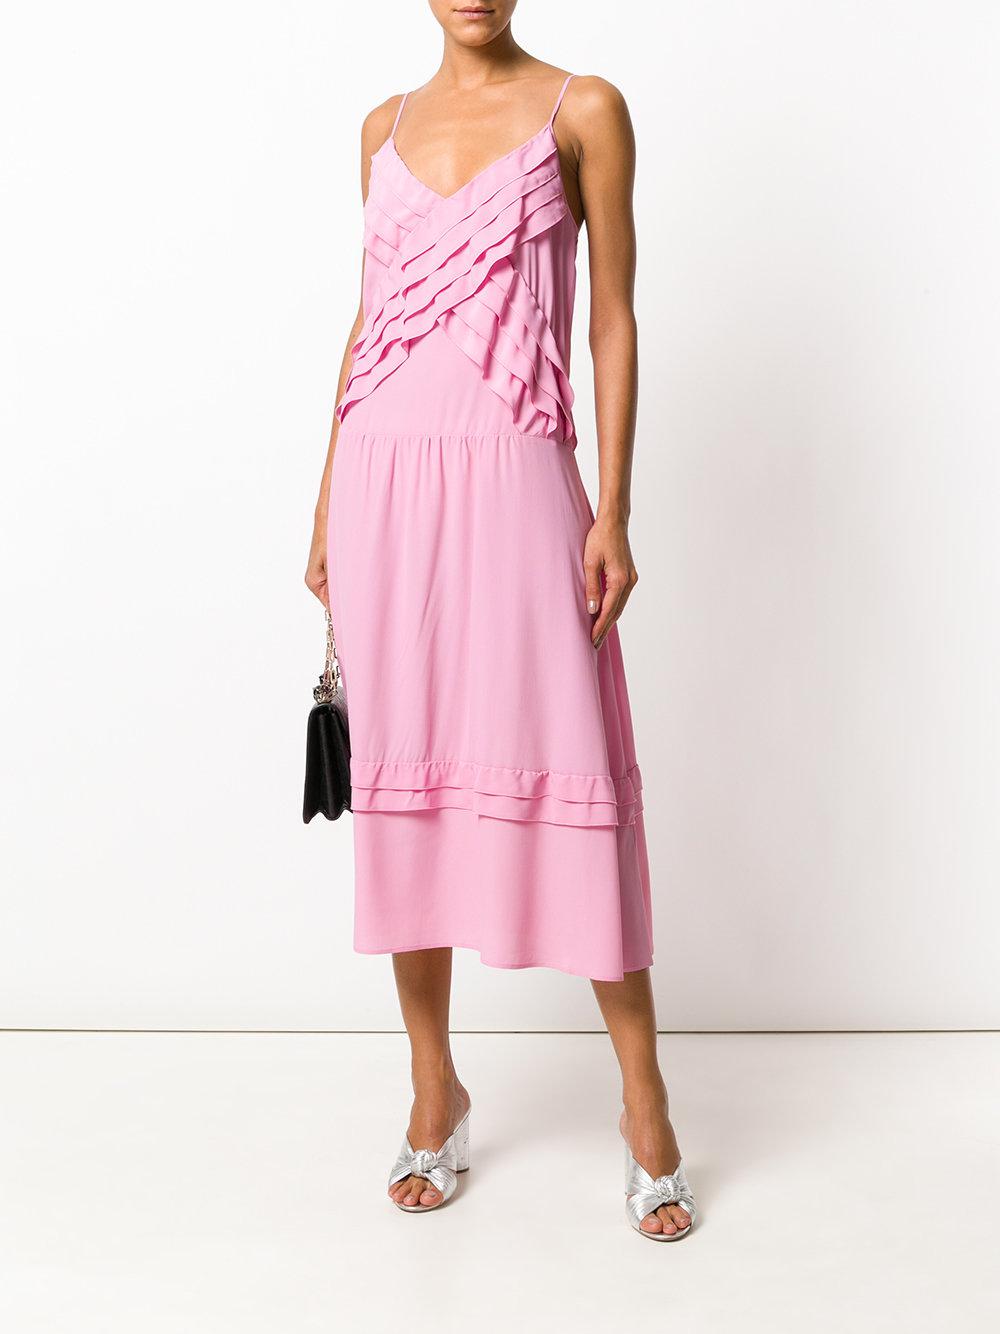 Lyst - N°21 Ruffle Trim Dress in Pink